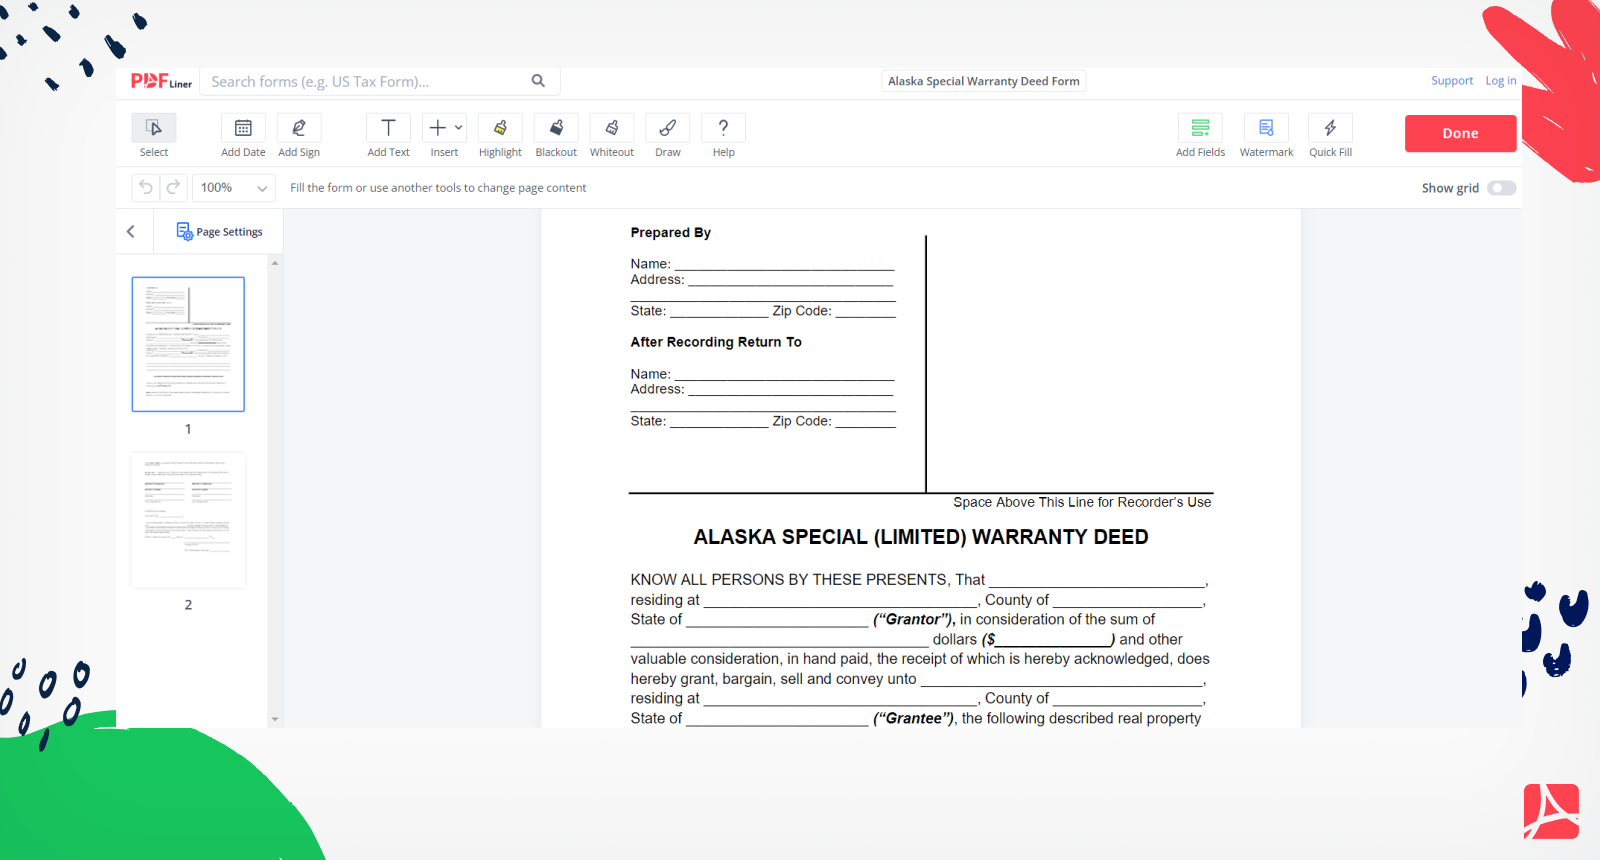 Alaska Special Warranty Deed Form Screenshot